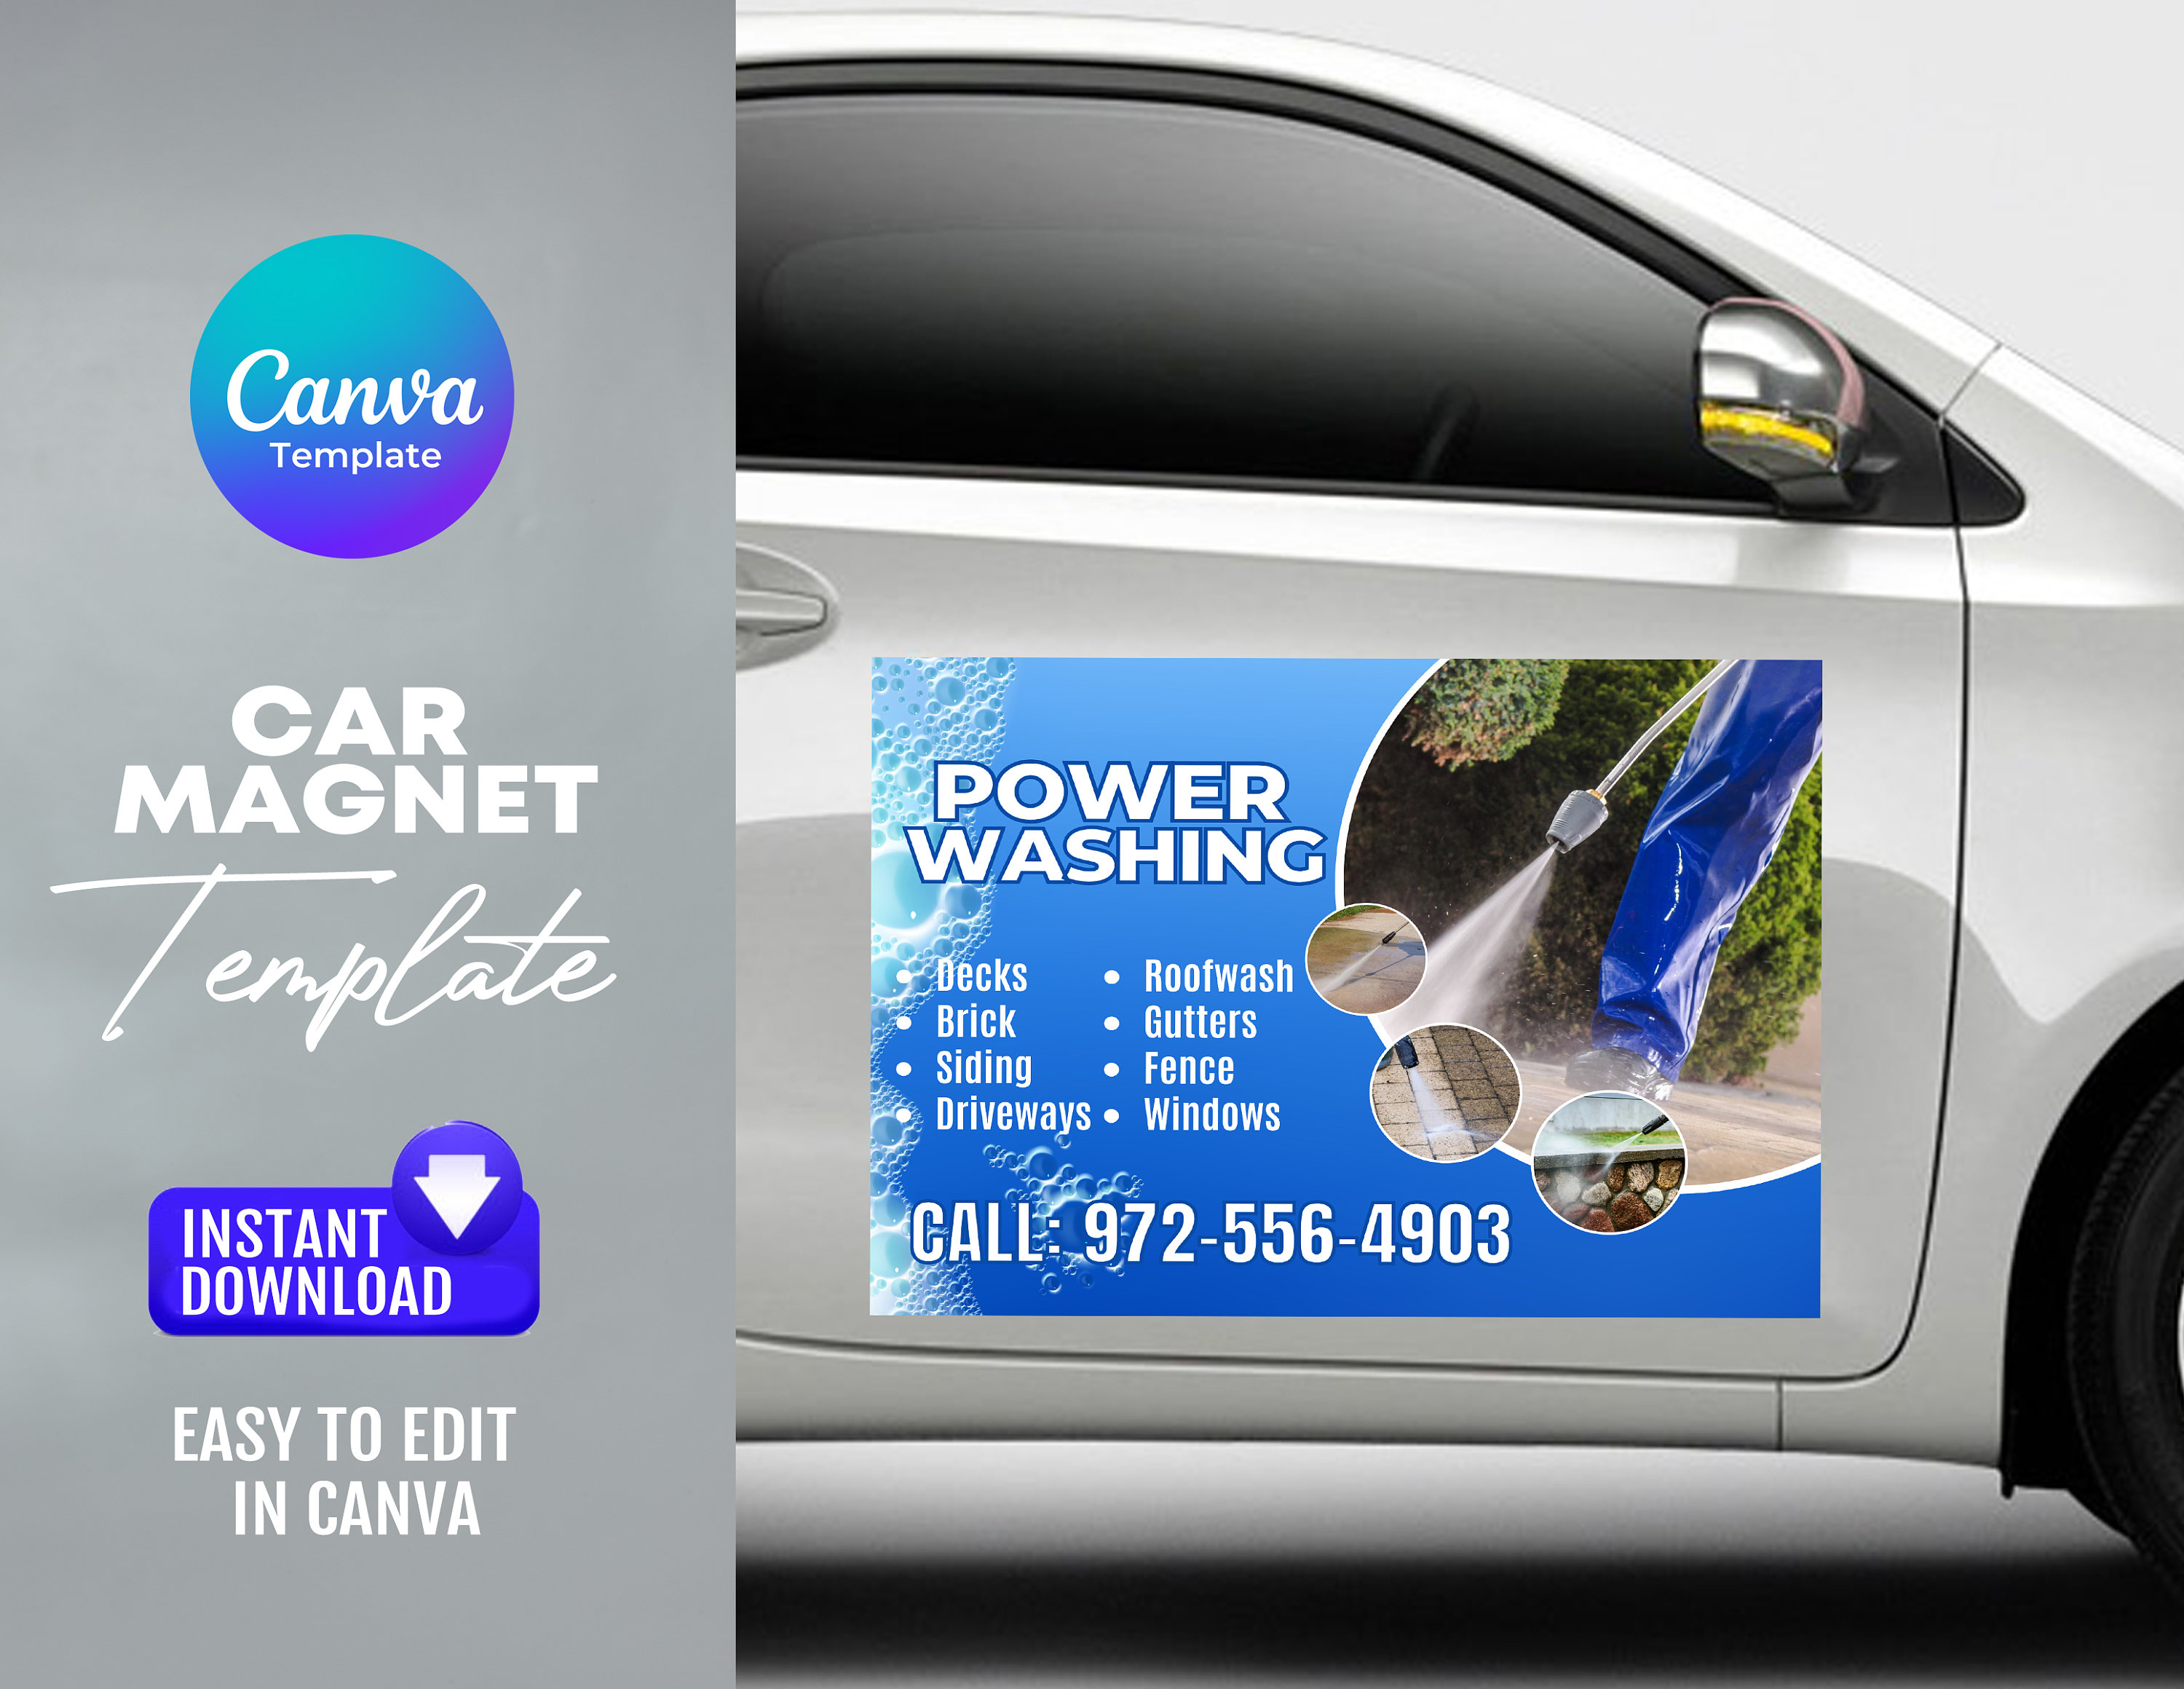 Pressure Washing Car Magnet Template, Power Washing Car Magnet Template 